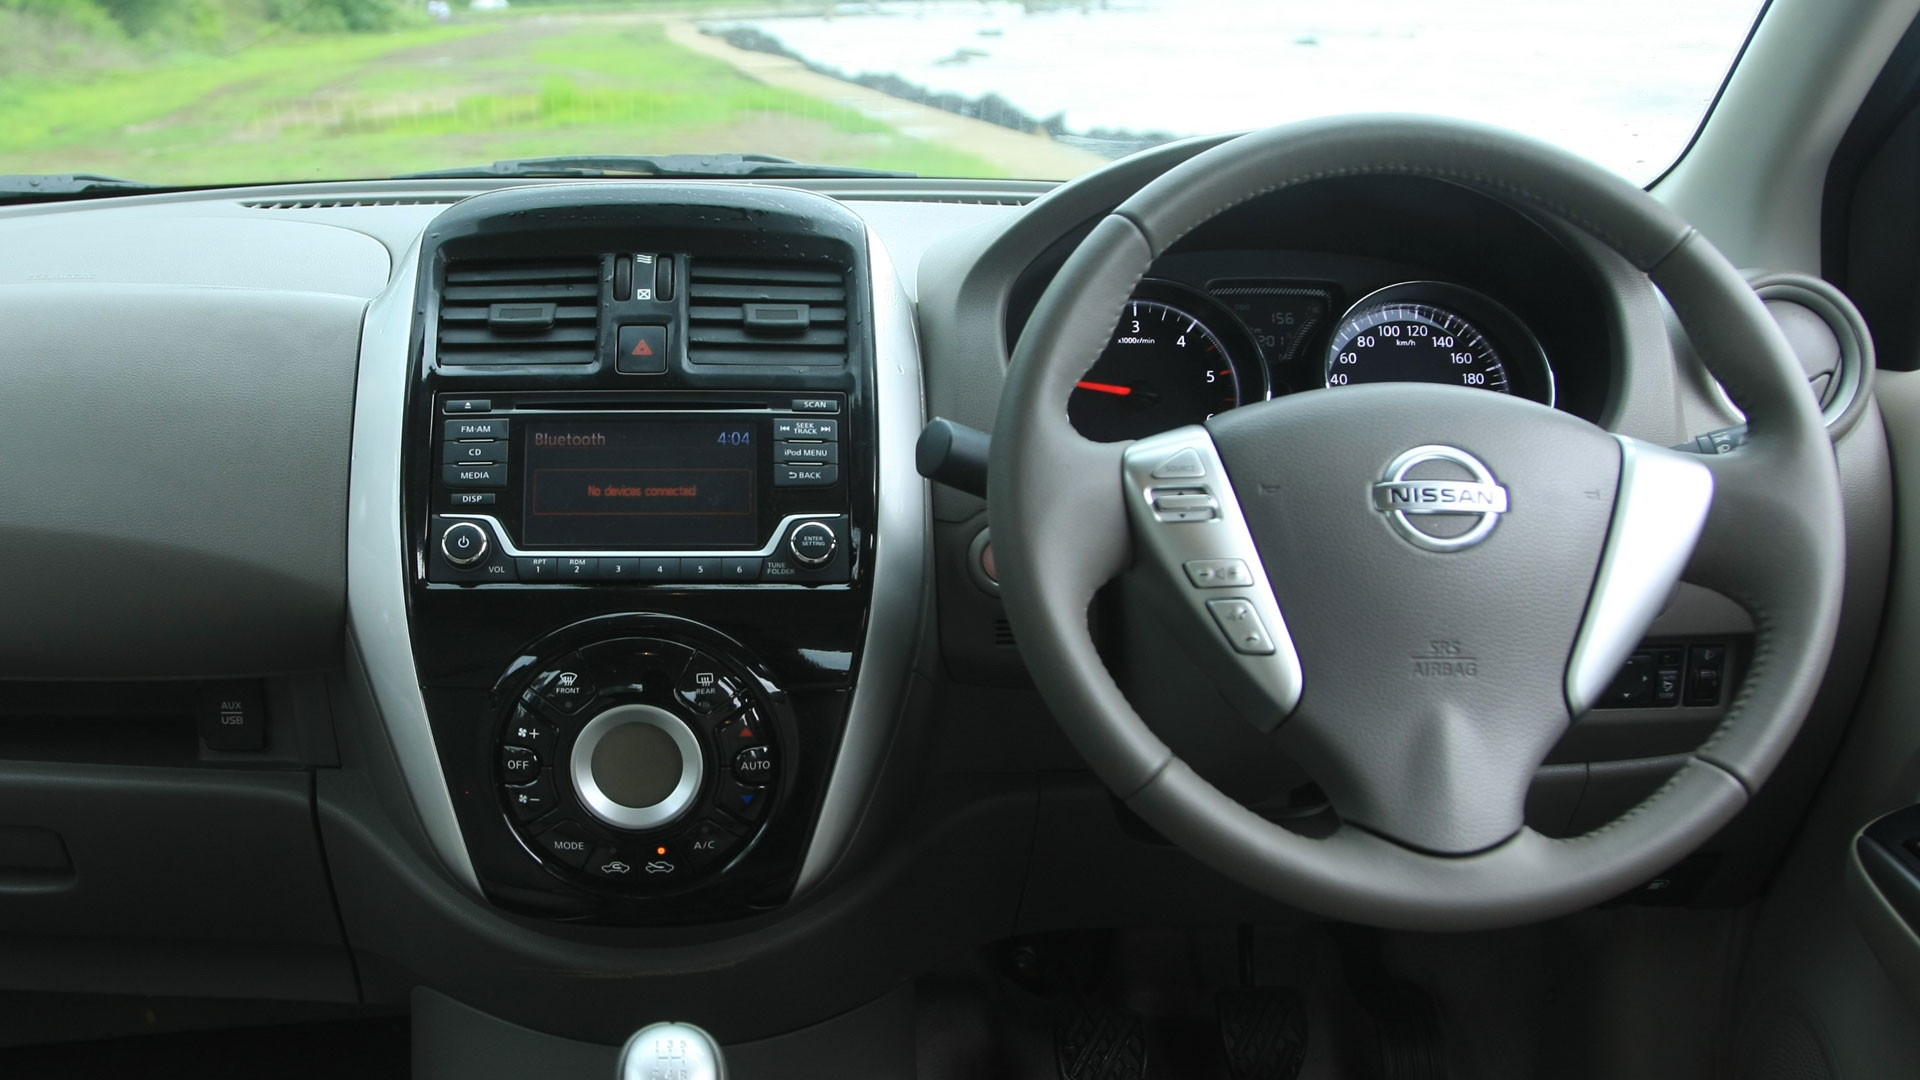 Nissan Sunny 2014 Interior Car Photos Overdrive